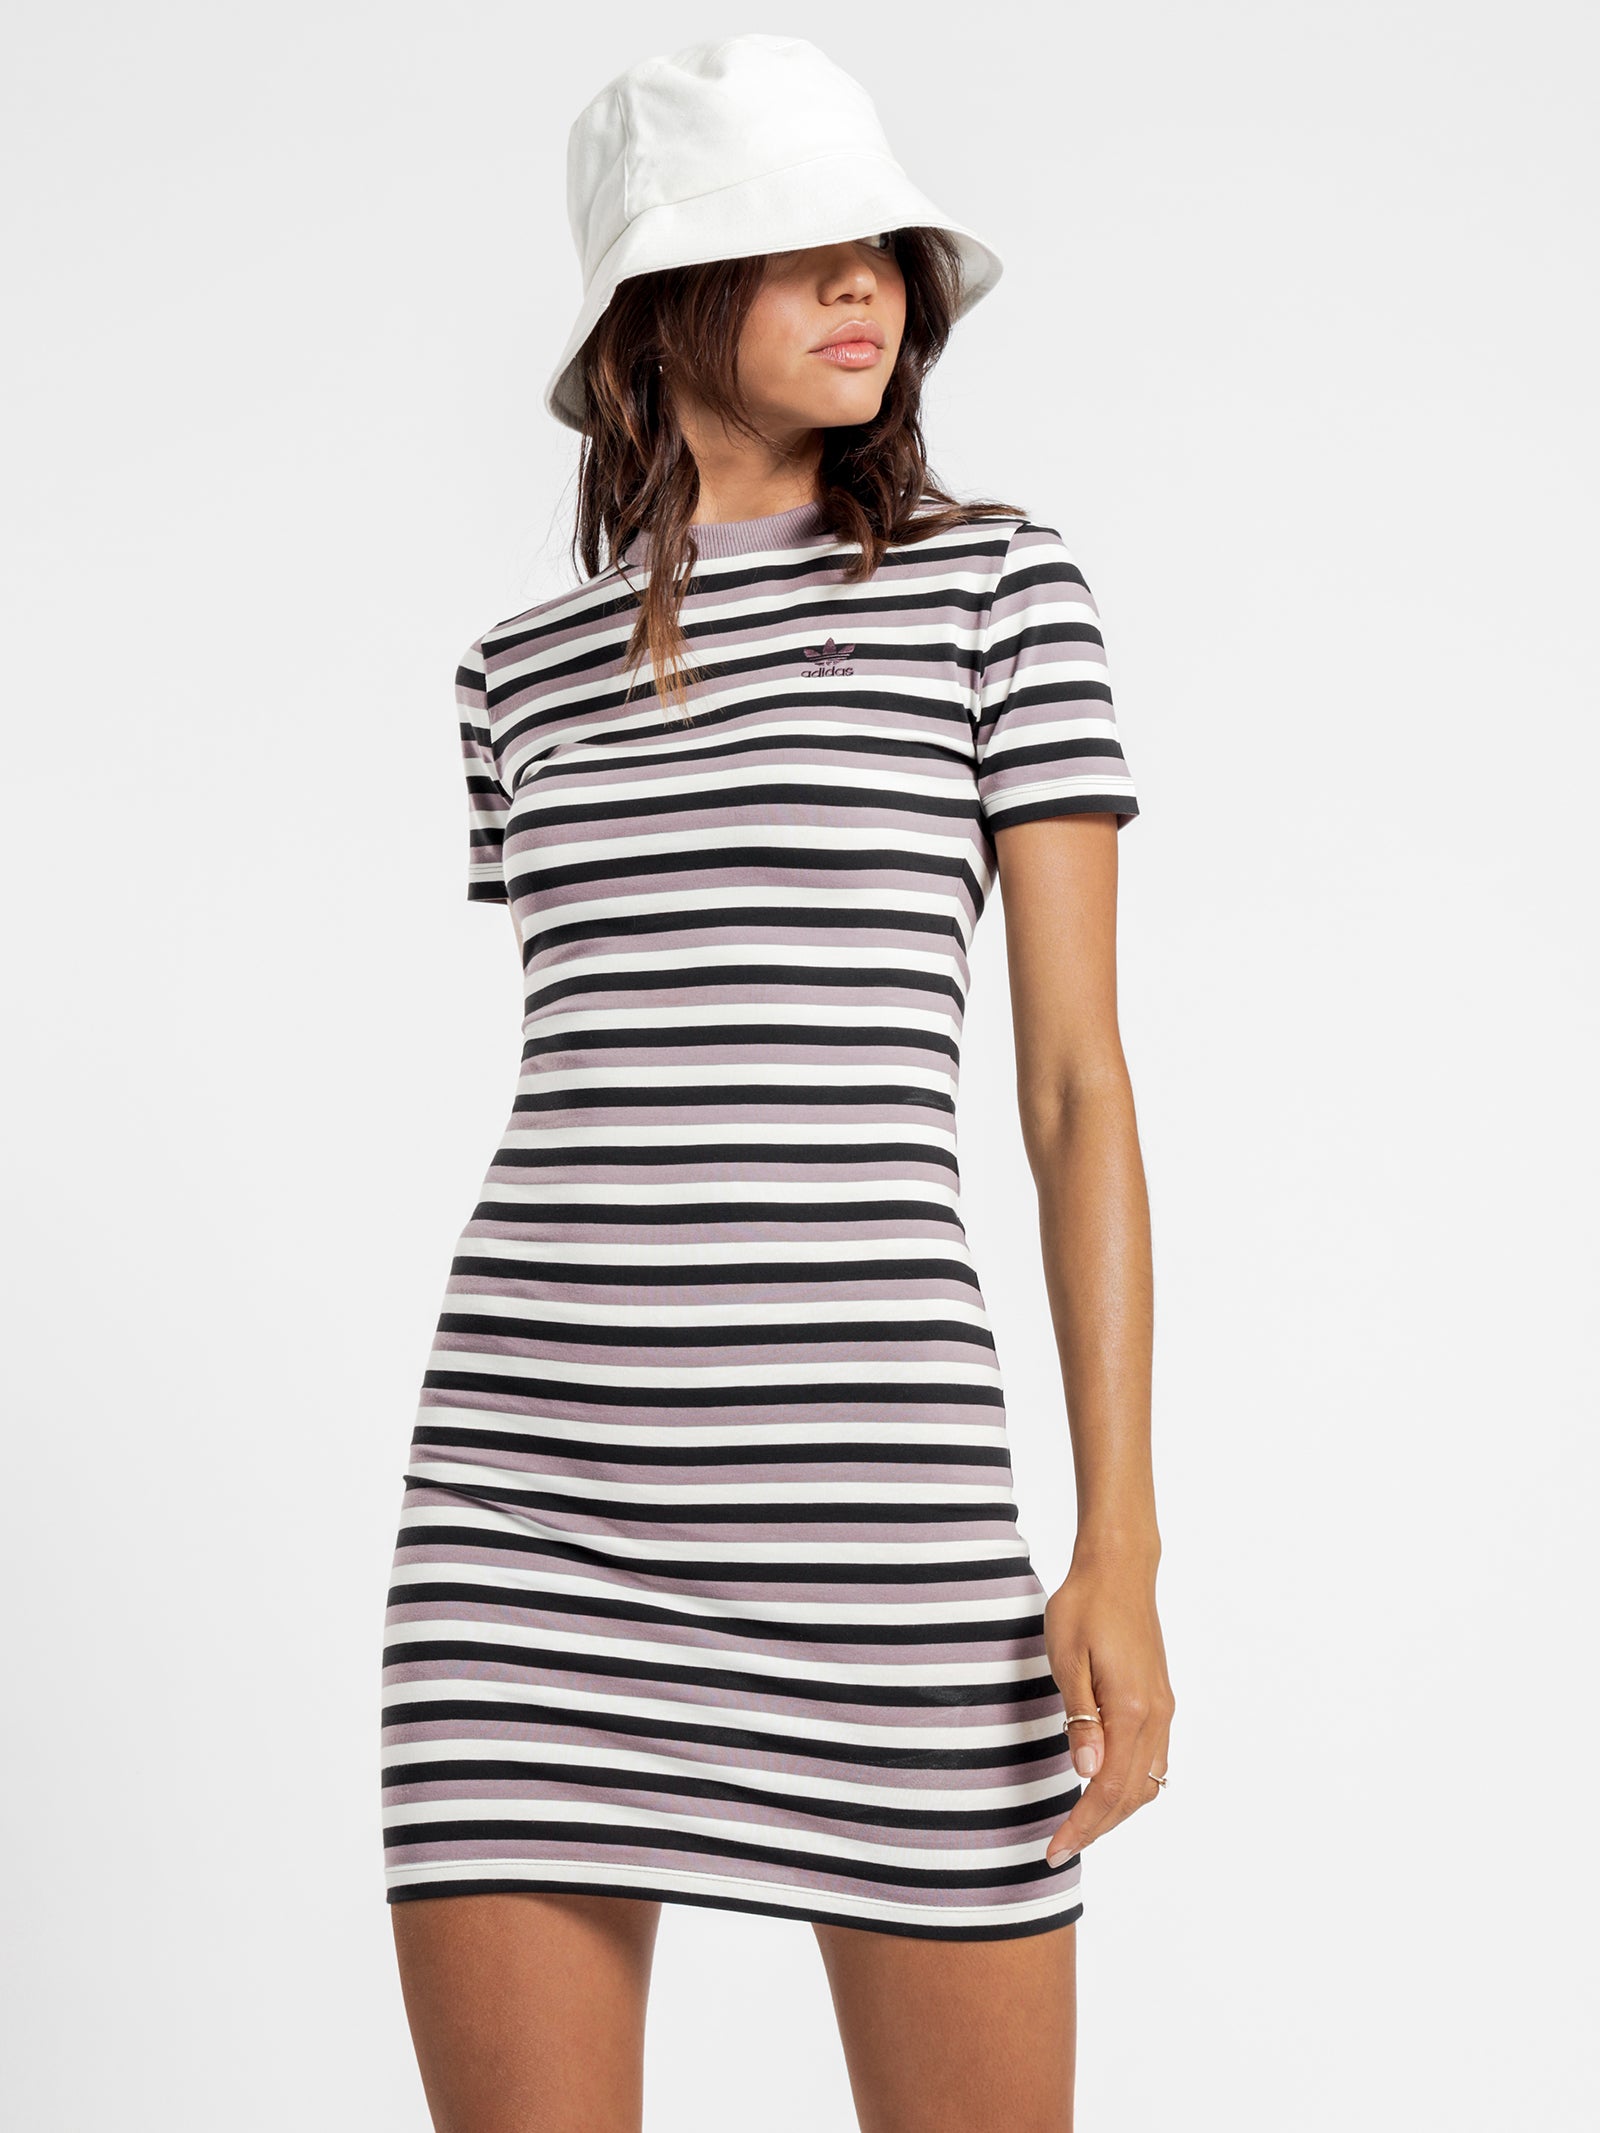 Striped Dress in Black & Off White